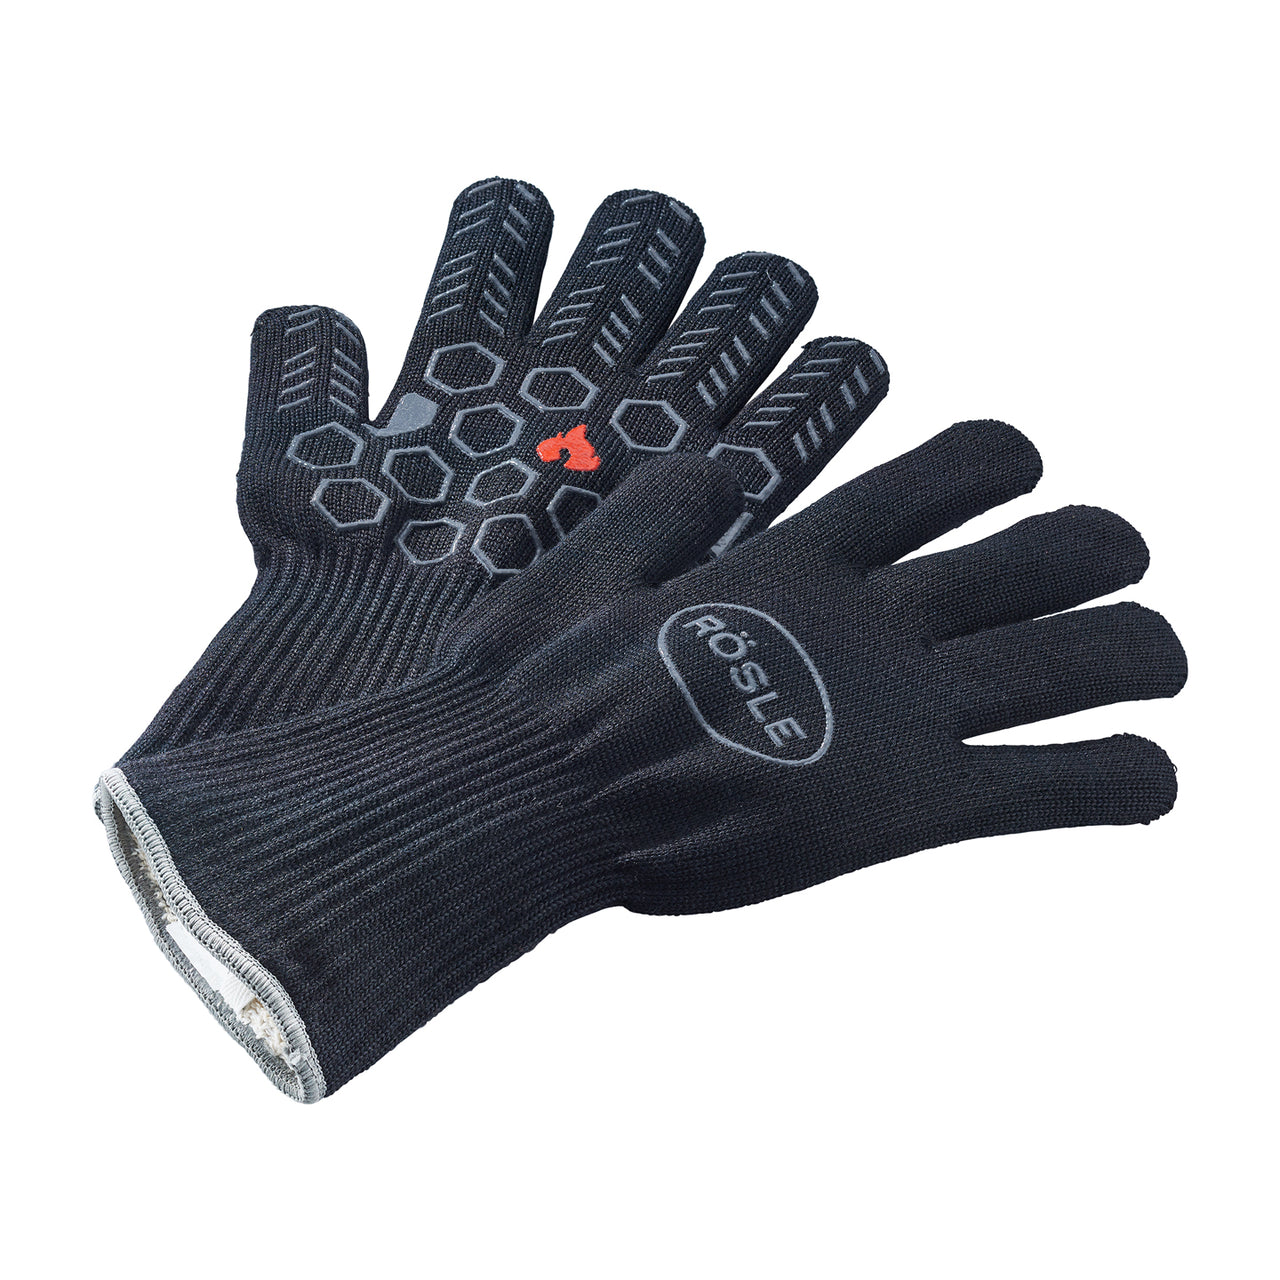 Rosle BBQ Premium 3 Piece Set / Knitted Gloves